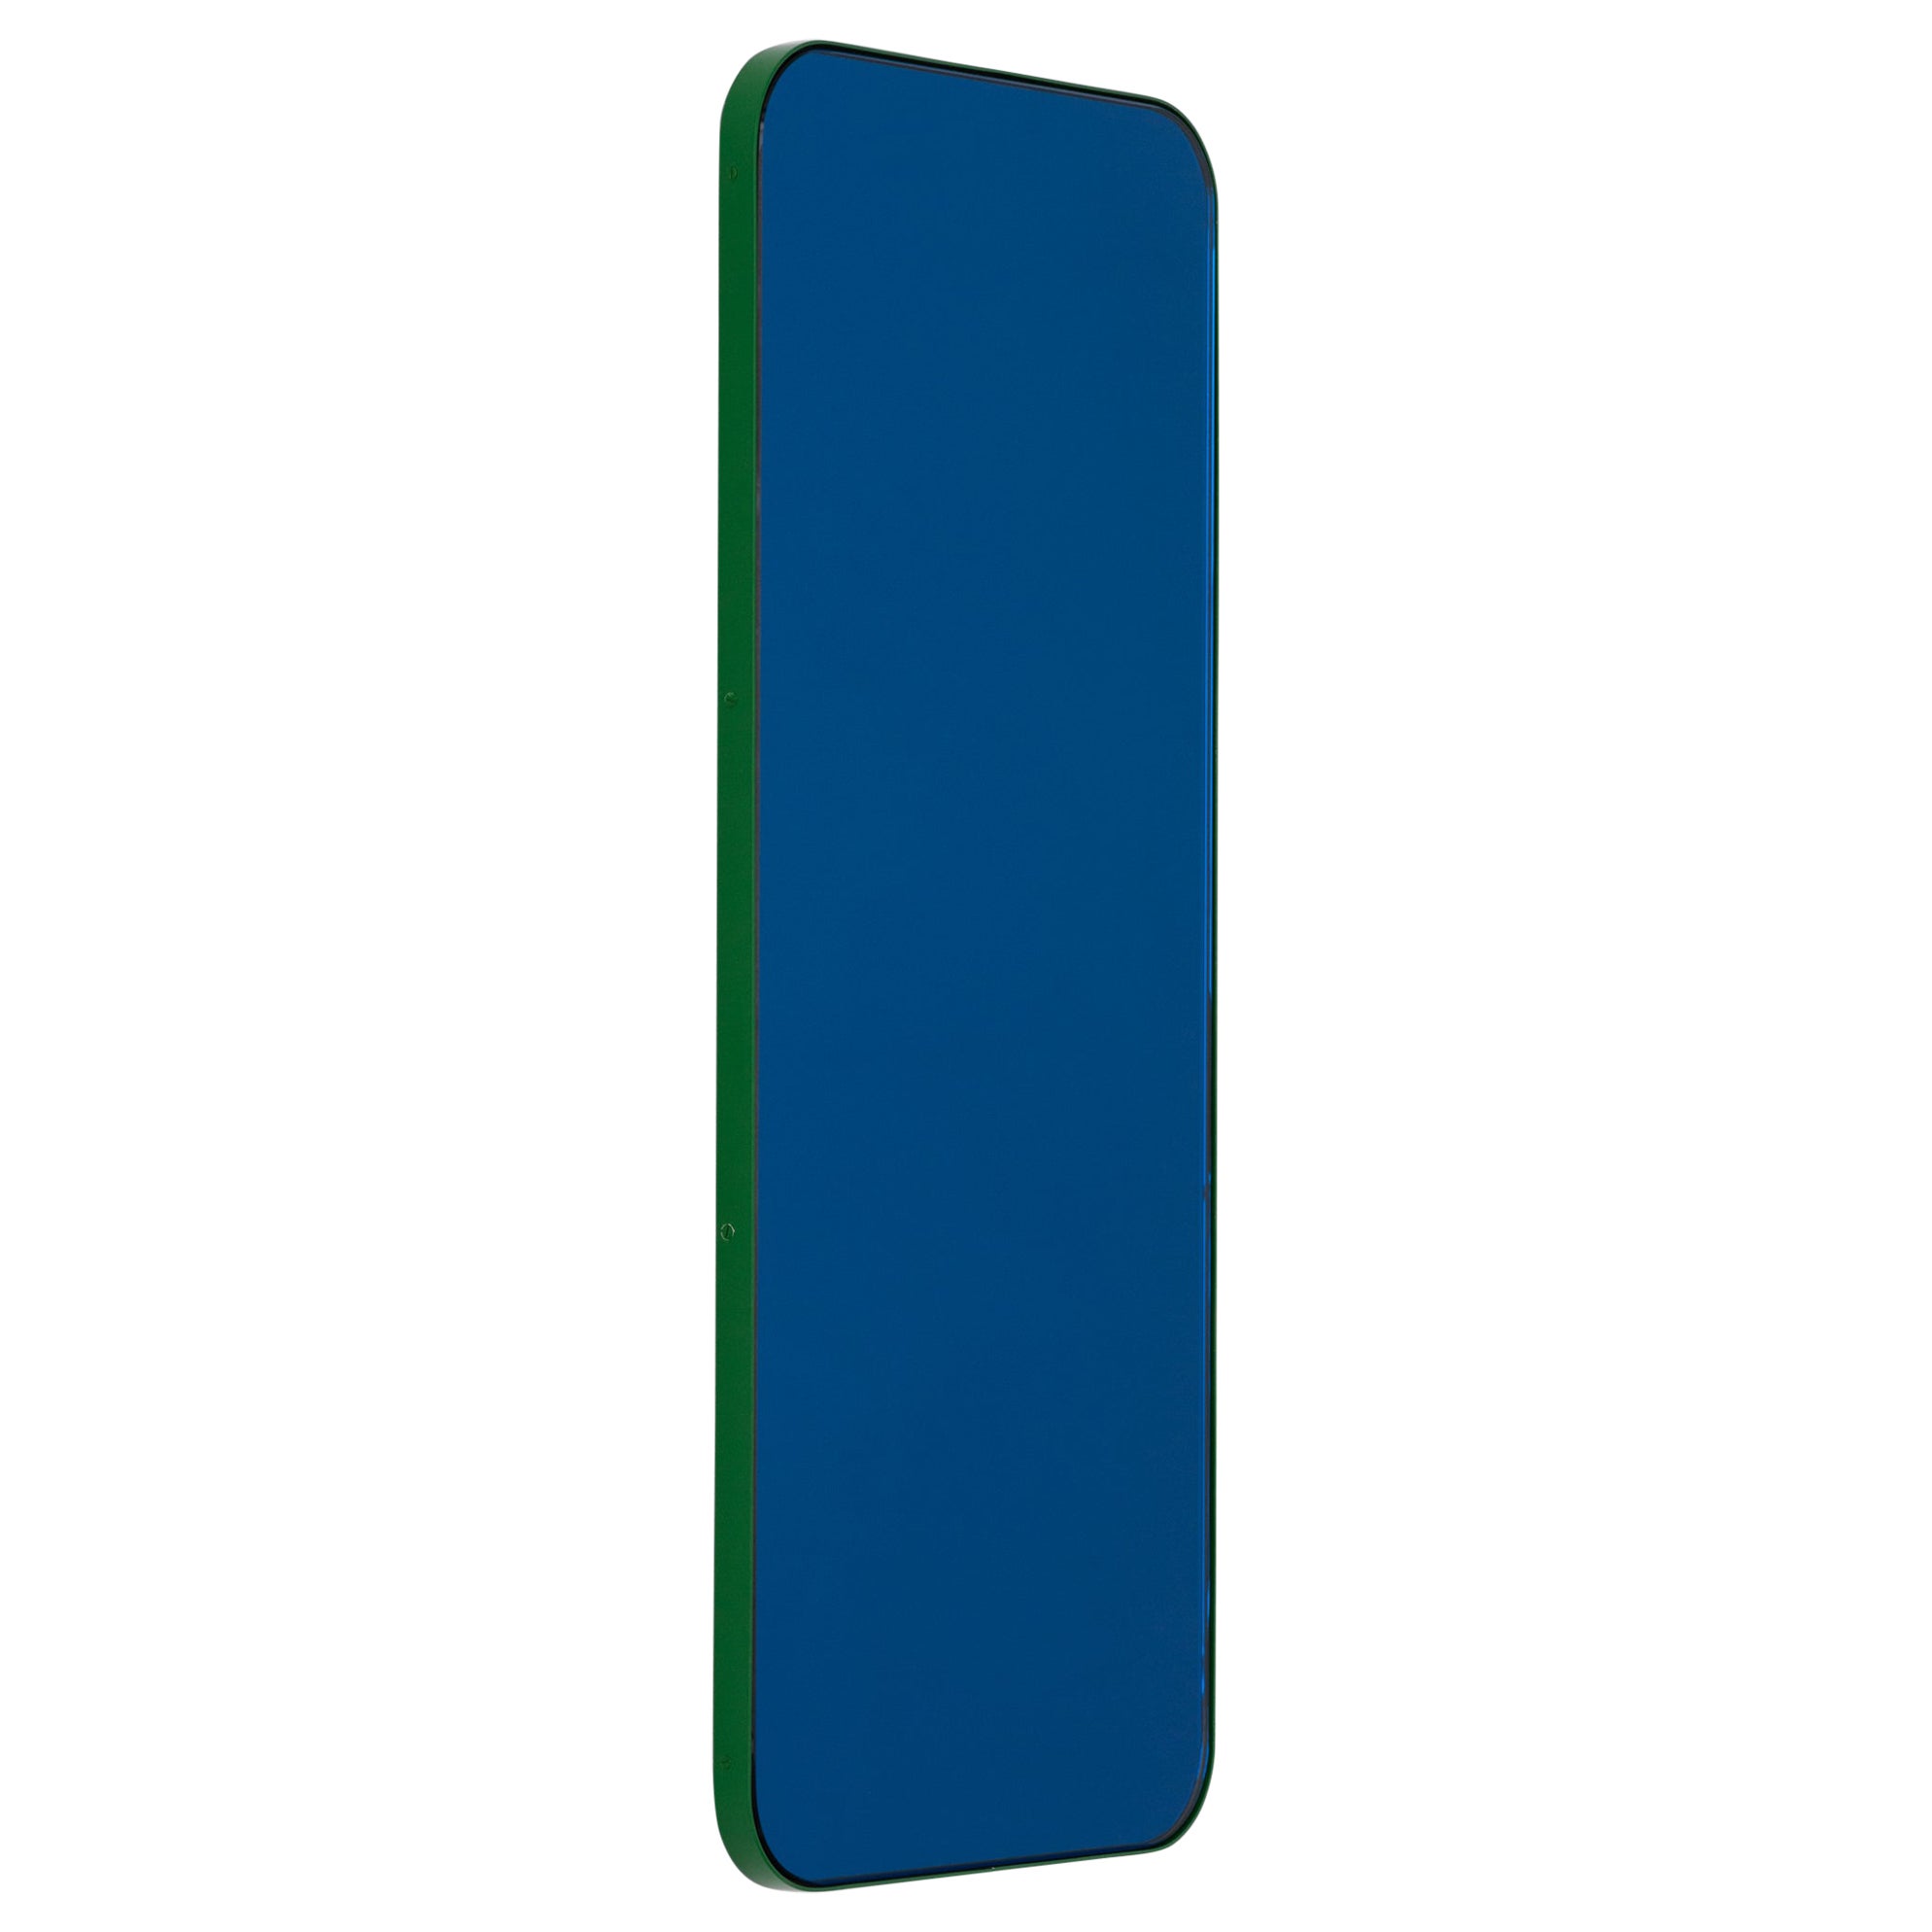 Quadris Miroir rectangulaire contemporain bleu avec cadre Modernity Greene & Greene, large